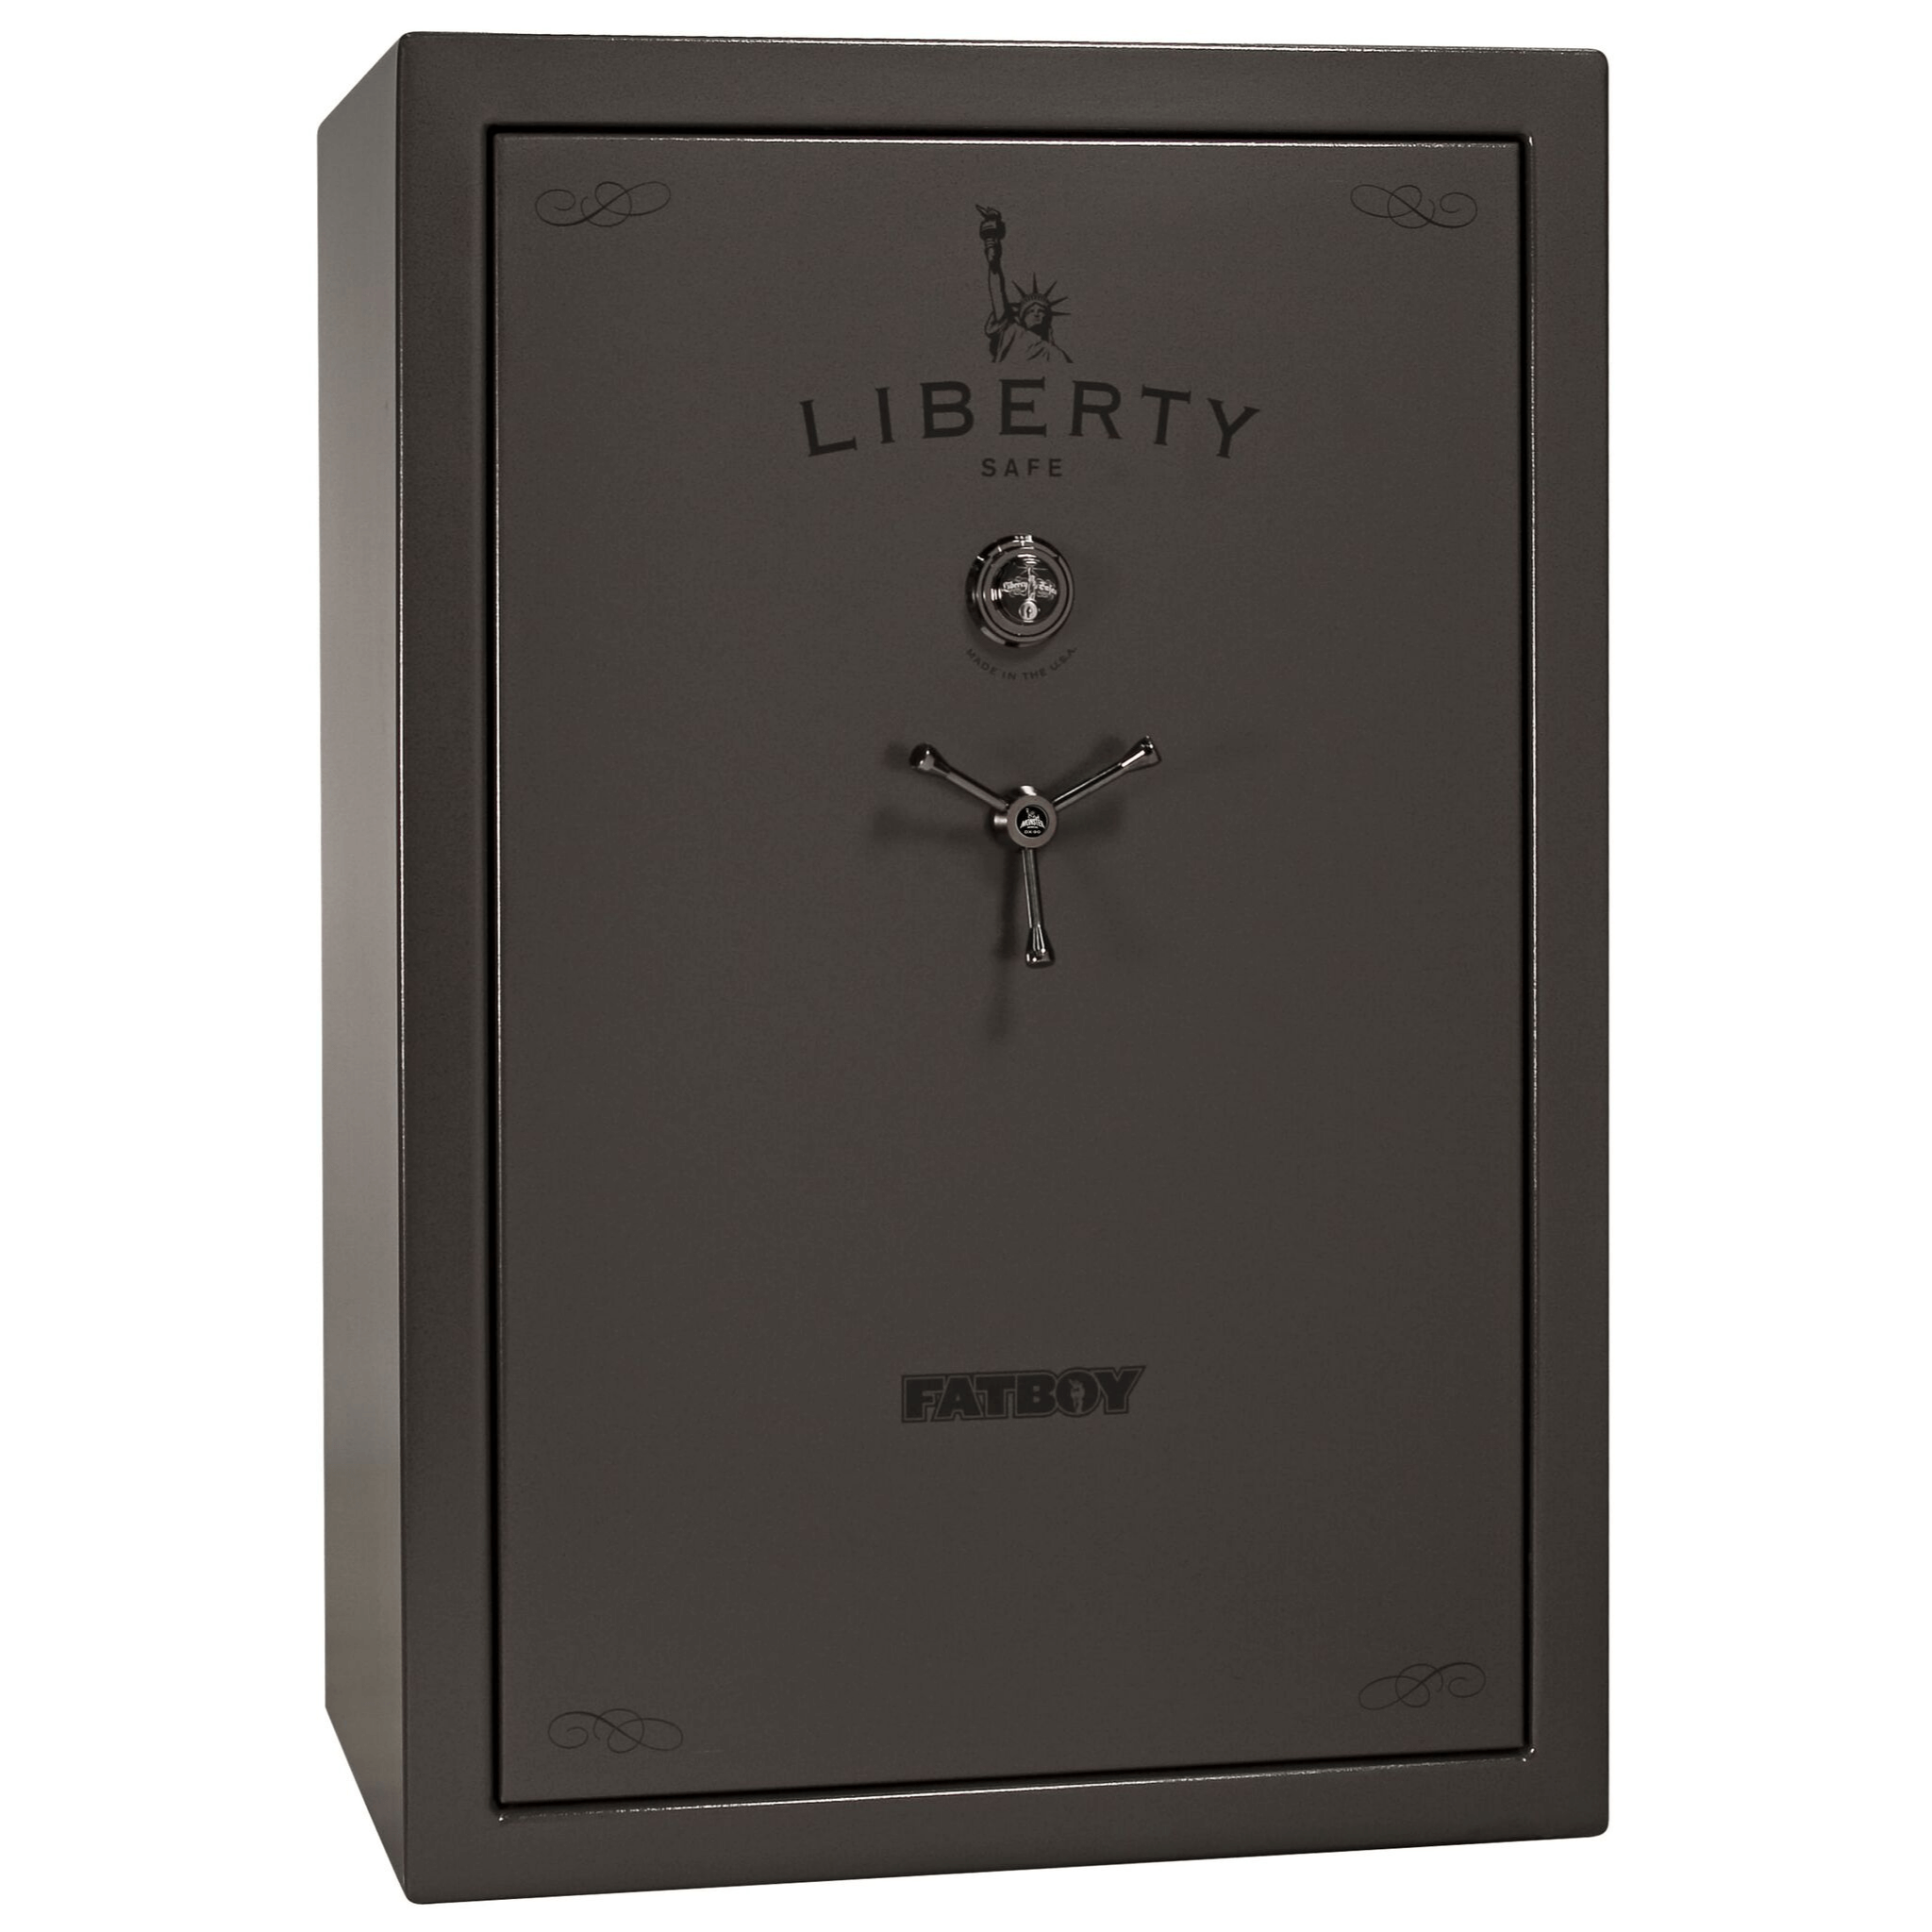 Liberty Fatboy Series Gun Safe Configurator, photo 21